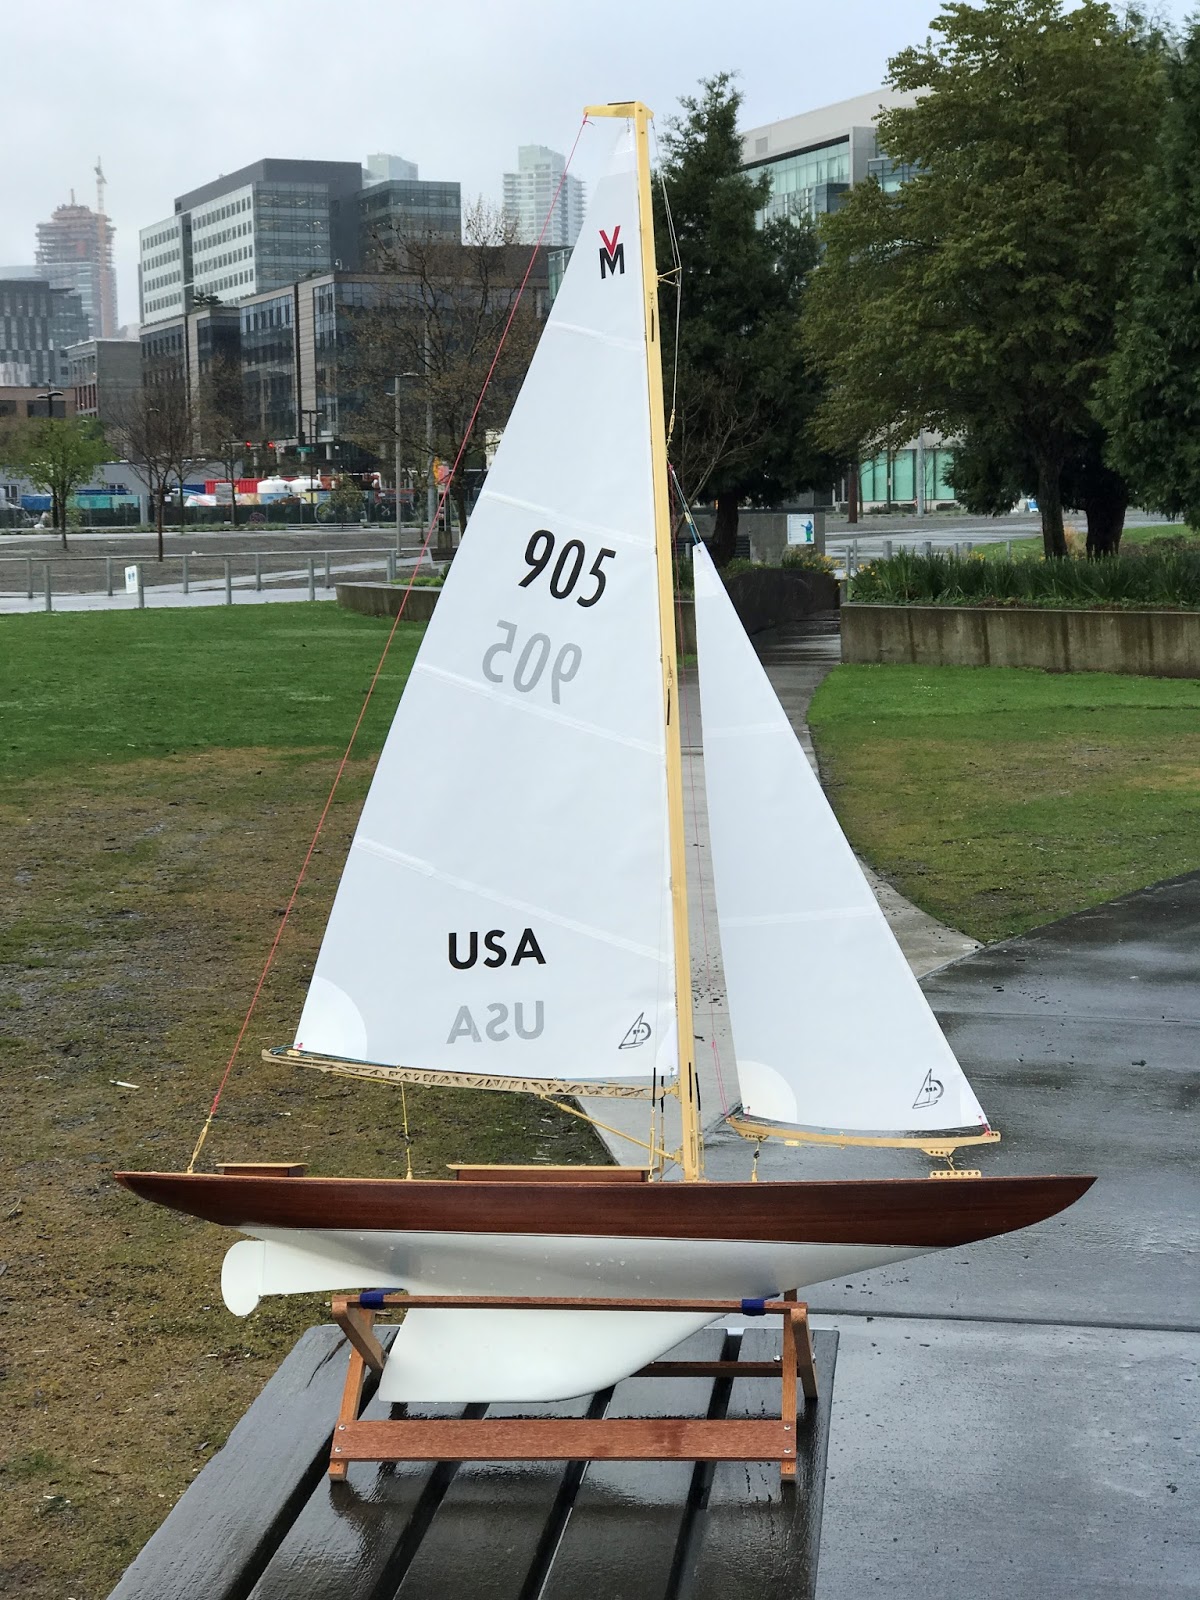 presenting the wampum vm vintage marblehead rc sailboat!